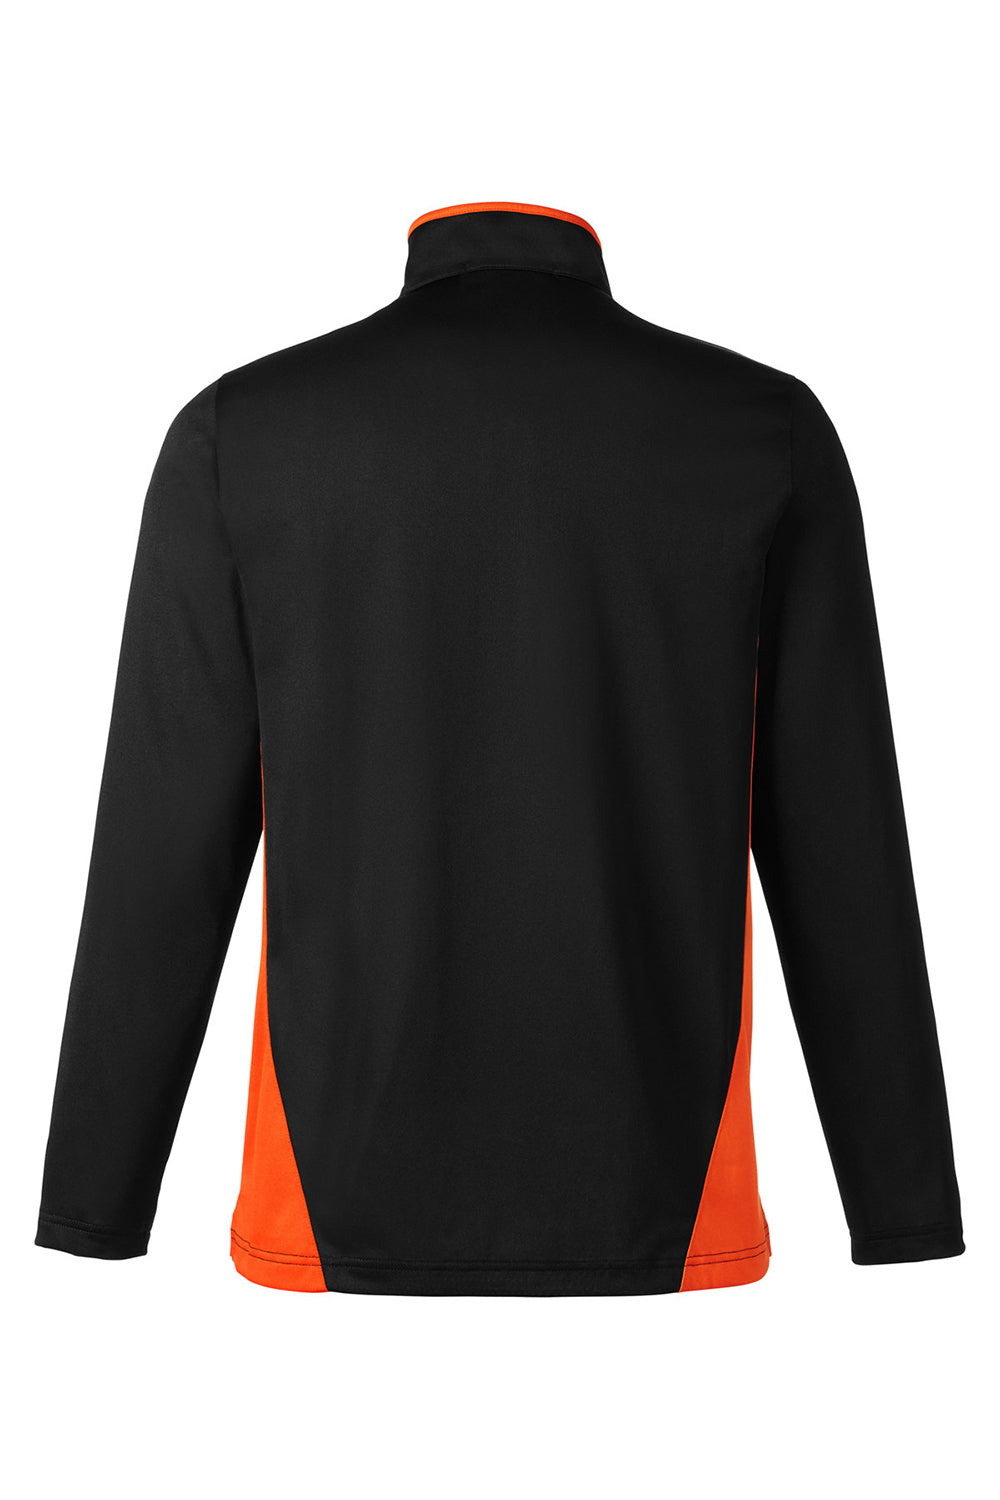 Harriton M786 Mens Flash Performance Moisture Wicking Colorblock 1/4 Zip Sweatshirt Black/Team Orange Flat Back